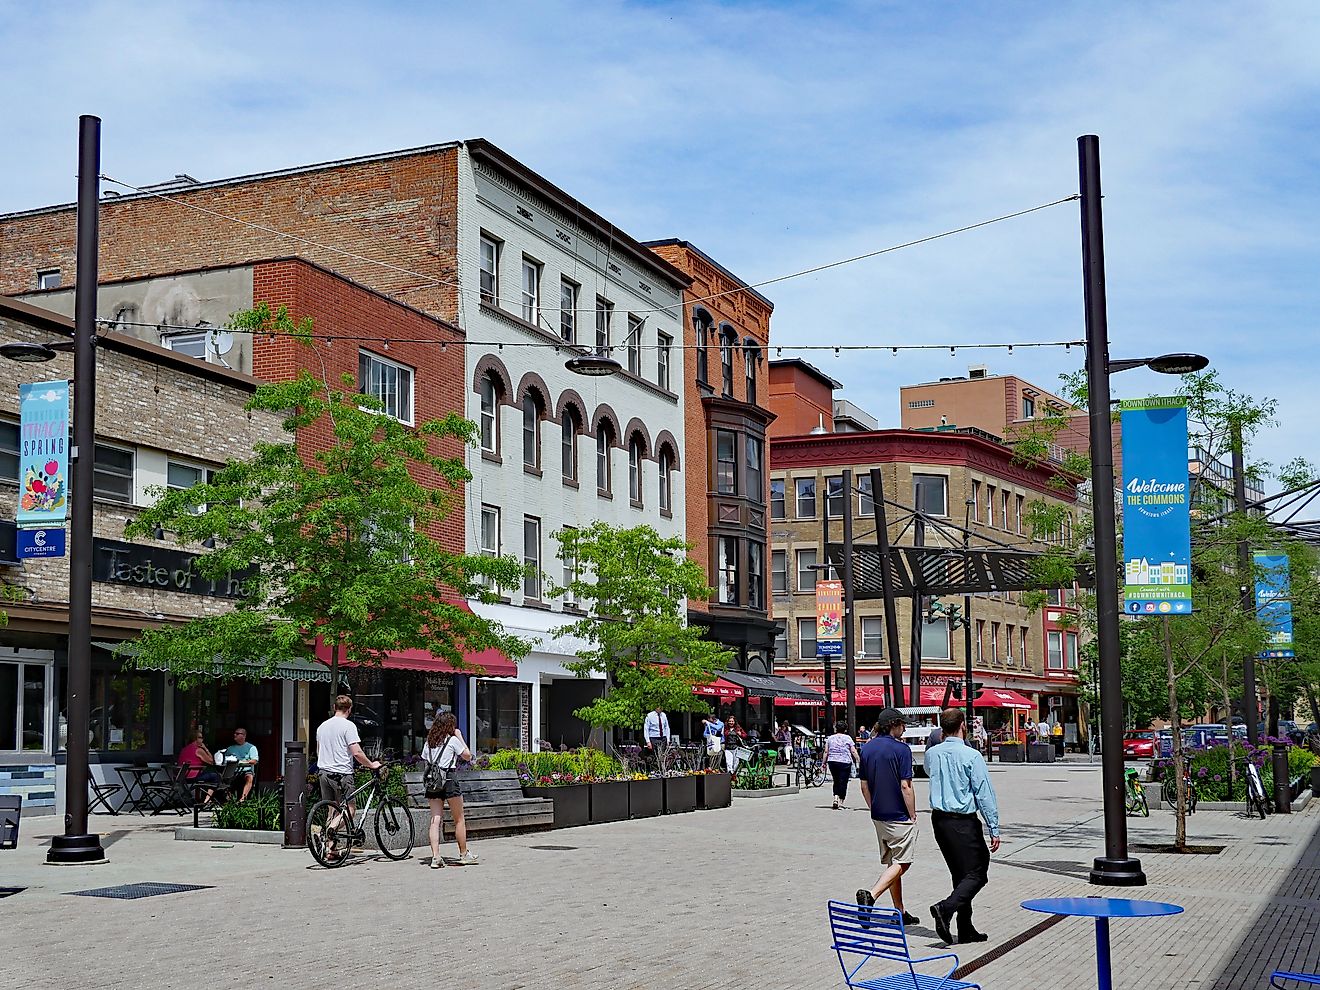 Pedestrianized street in downtown Ithaca, New York. Editorial credit: Spiroview Inc / Shutterstock.com